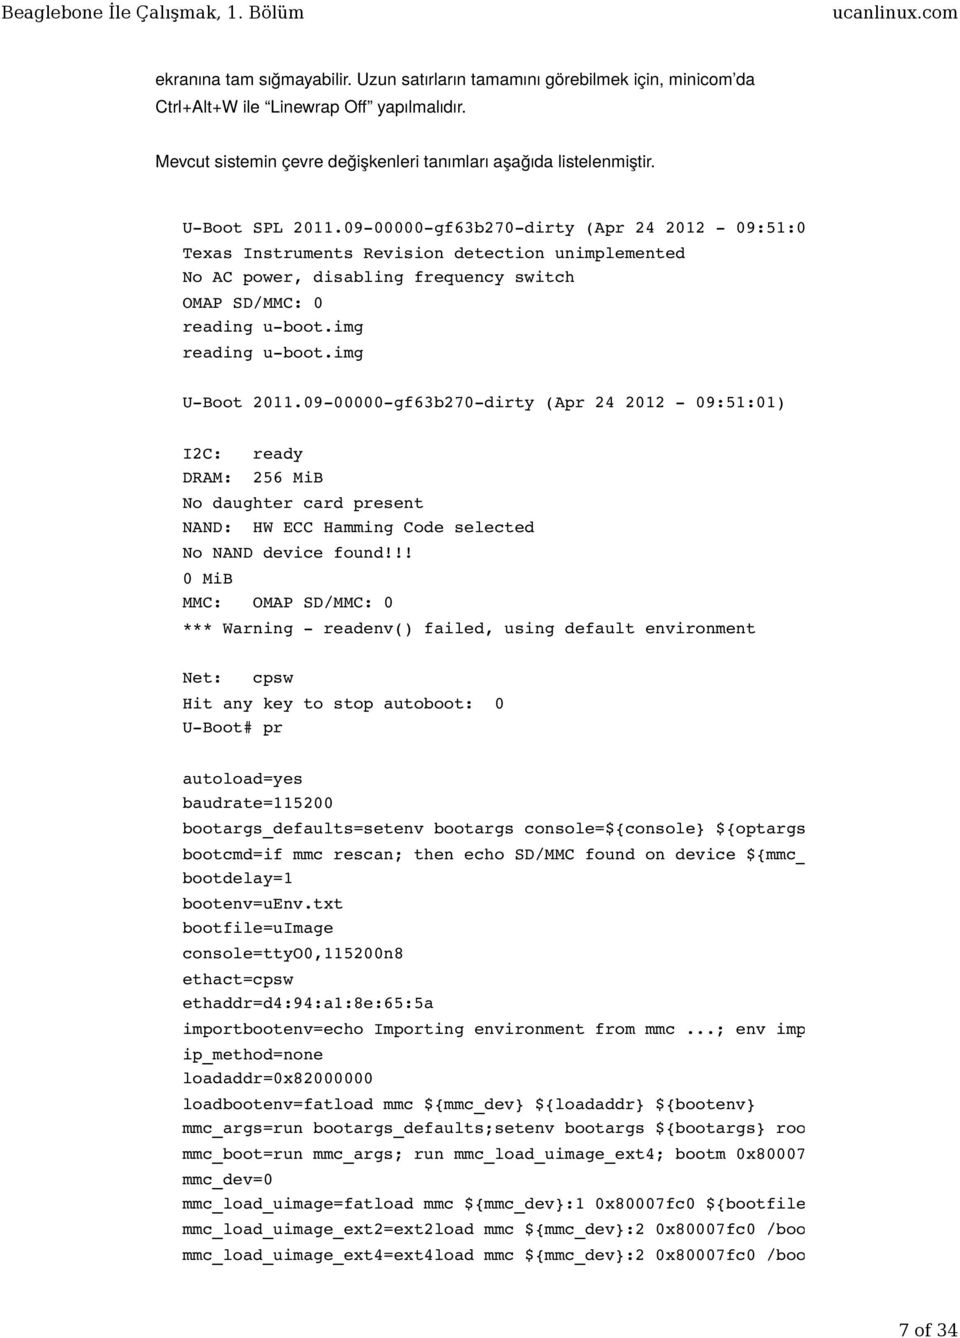 img reading u-boot.img U-Boot 2011.09-00000-gf63b270-dirty (Apr 24 2012-09:51:01) I2C: ready DRAM: 256 MiB No daughter card present NAND: HW ECC Hamming Code selected No NAND device found!